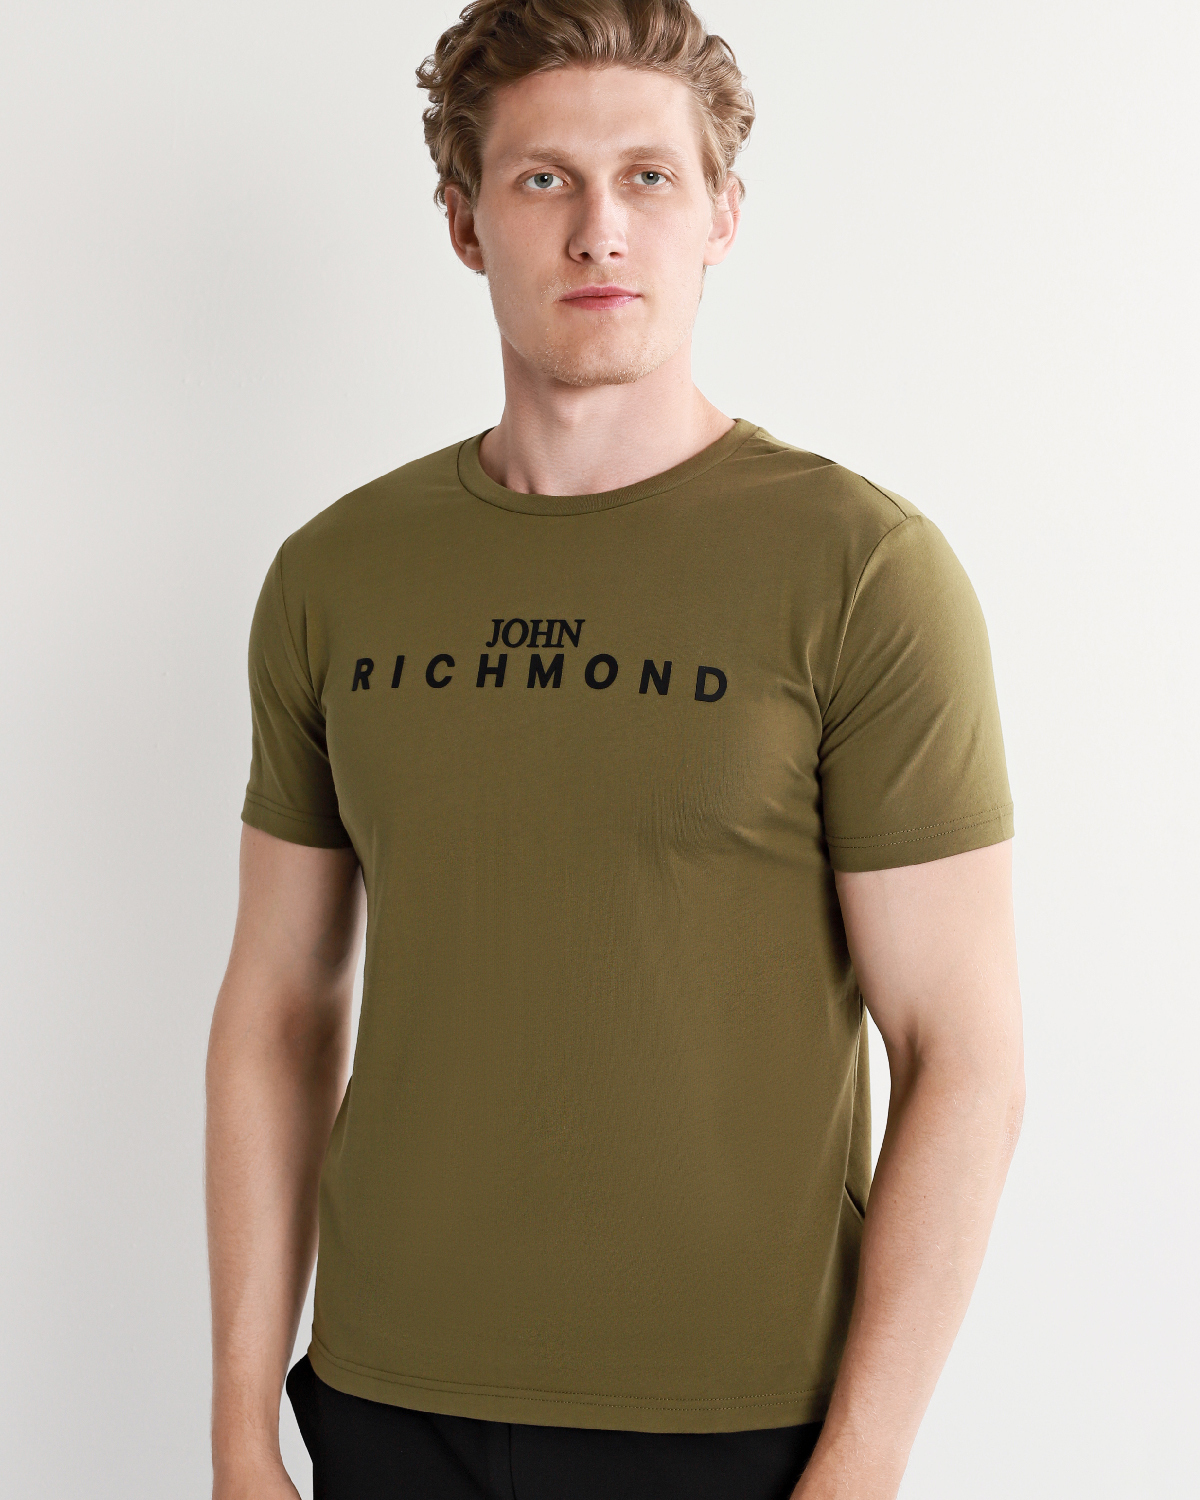 Футболка ричмонд. John Richmond футболка 50 Rock 50. Джон Ричмонд одежда мужская. John Richmond футболка. Футболка John Richmond hmp22296ts.